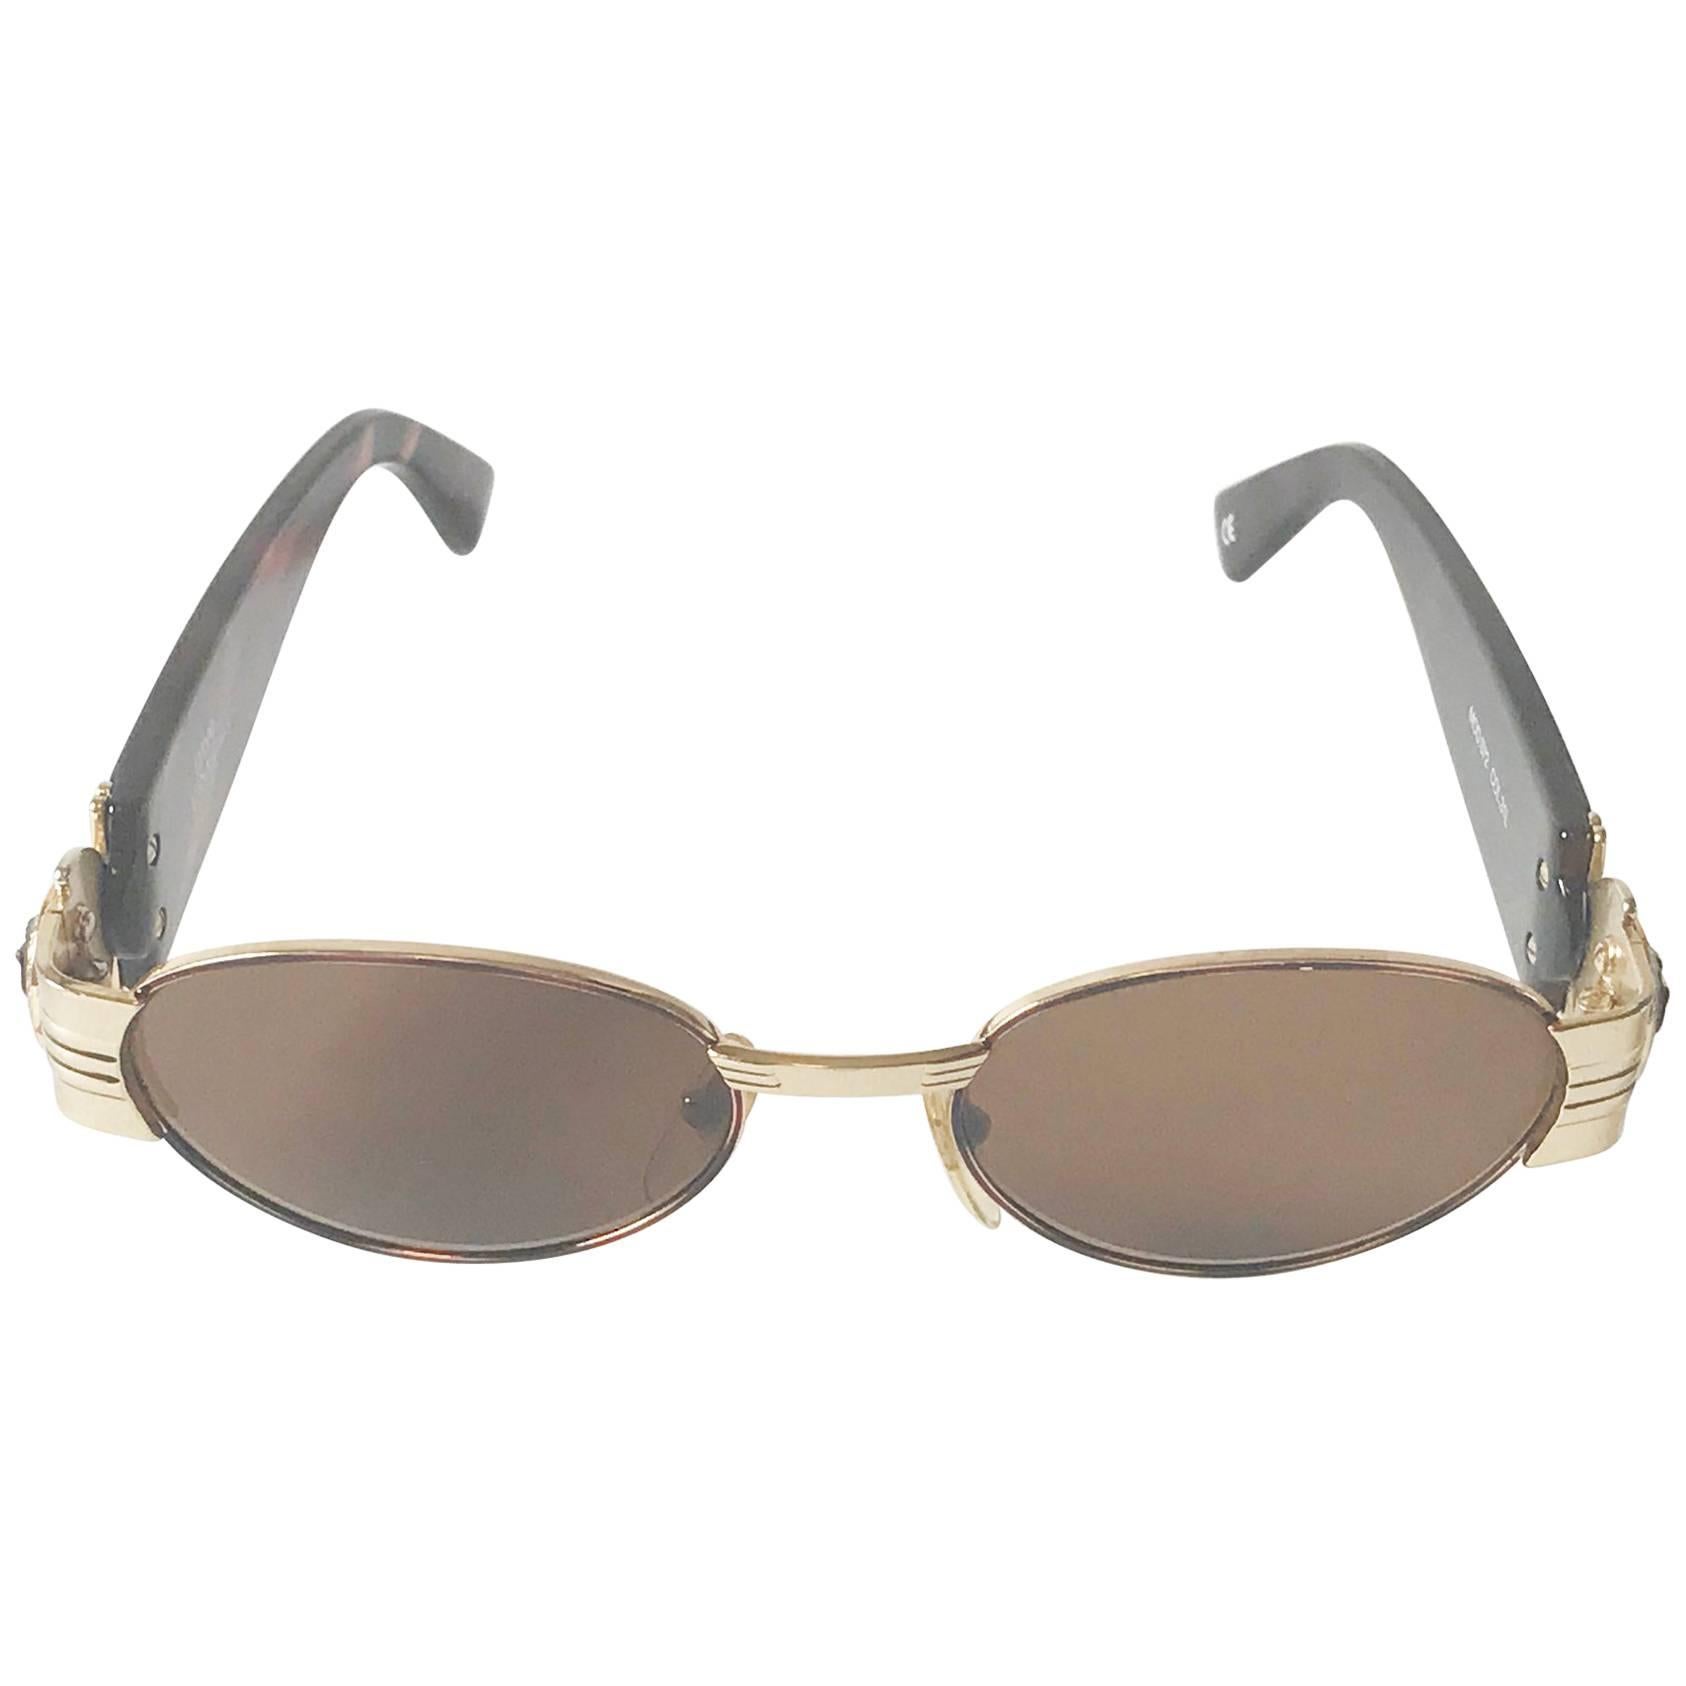 Gianni Versace Sunglasses. Mod. S72 Col. 31L.